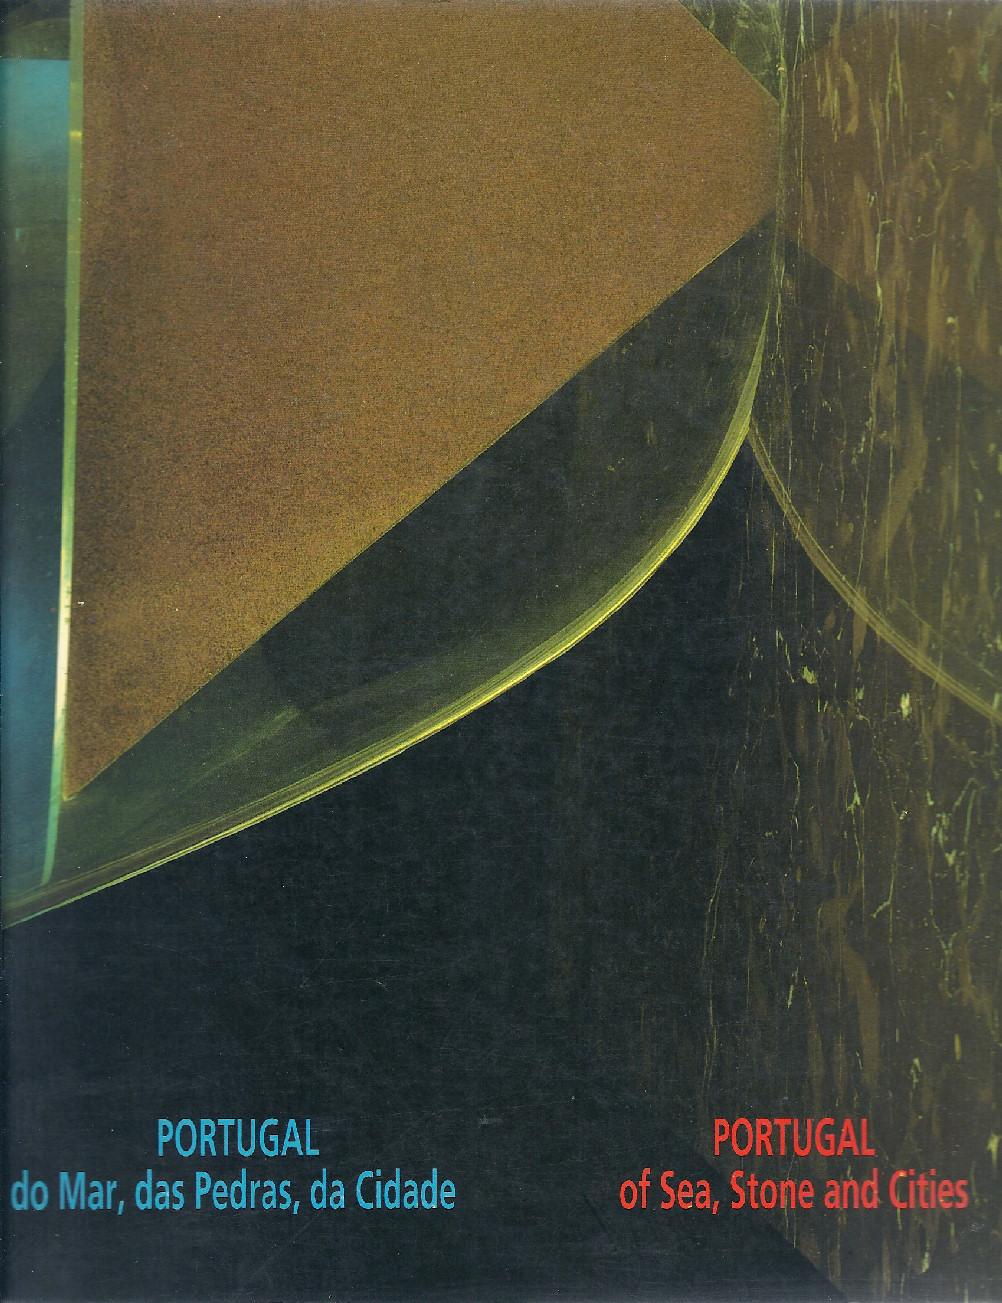 Portugal do Mar, das Pedras, da Cidade / Portugal pf Sea, Stone and Cities. Portuguese Participation in the Architecture Exhibition of the XIXth Milan International Triennal, 1996.